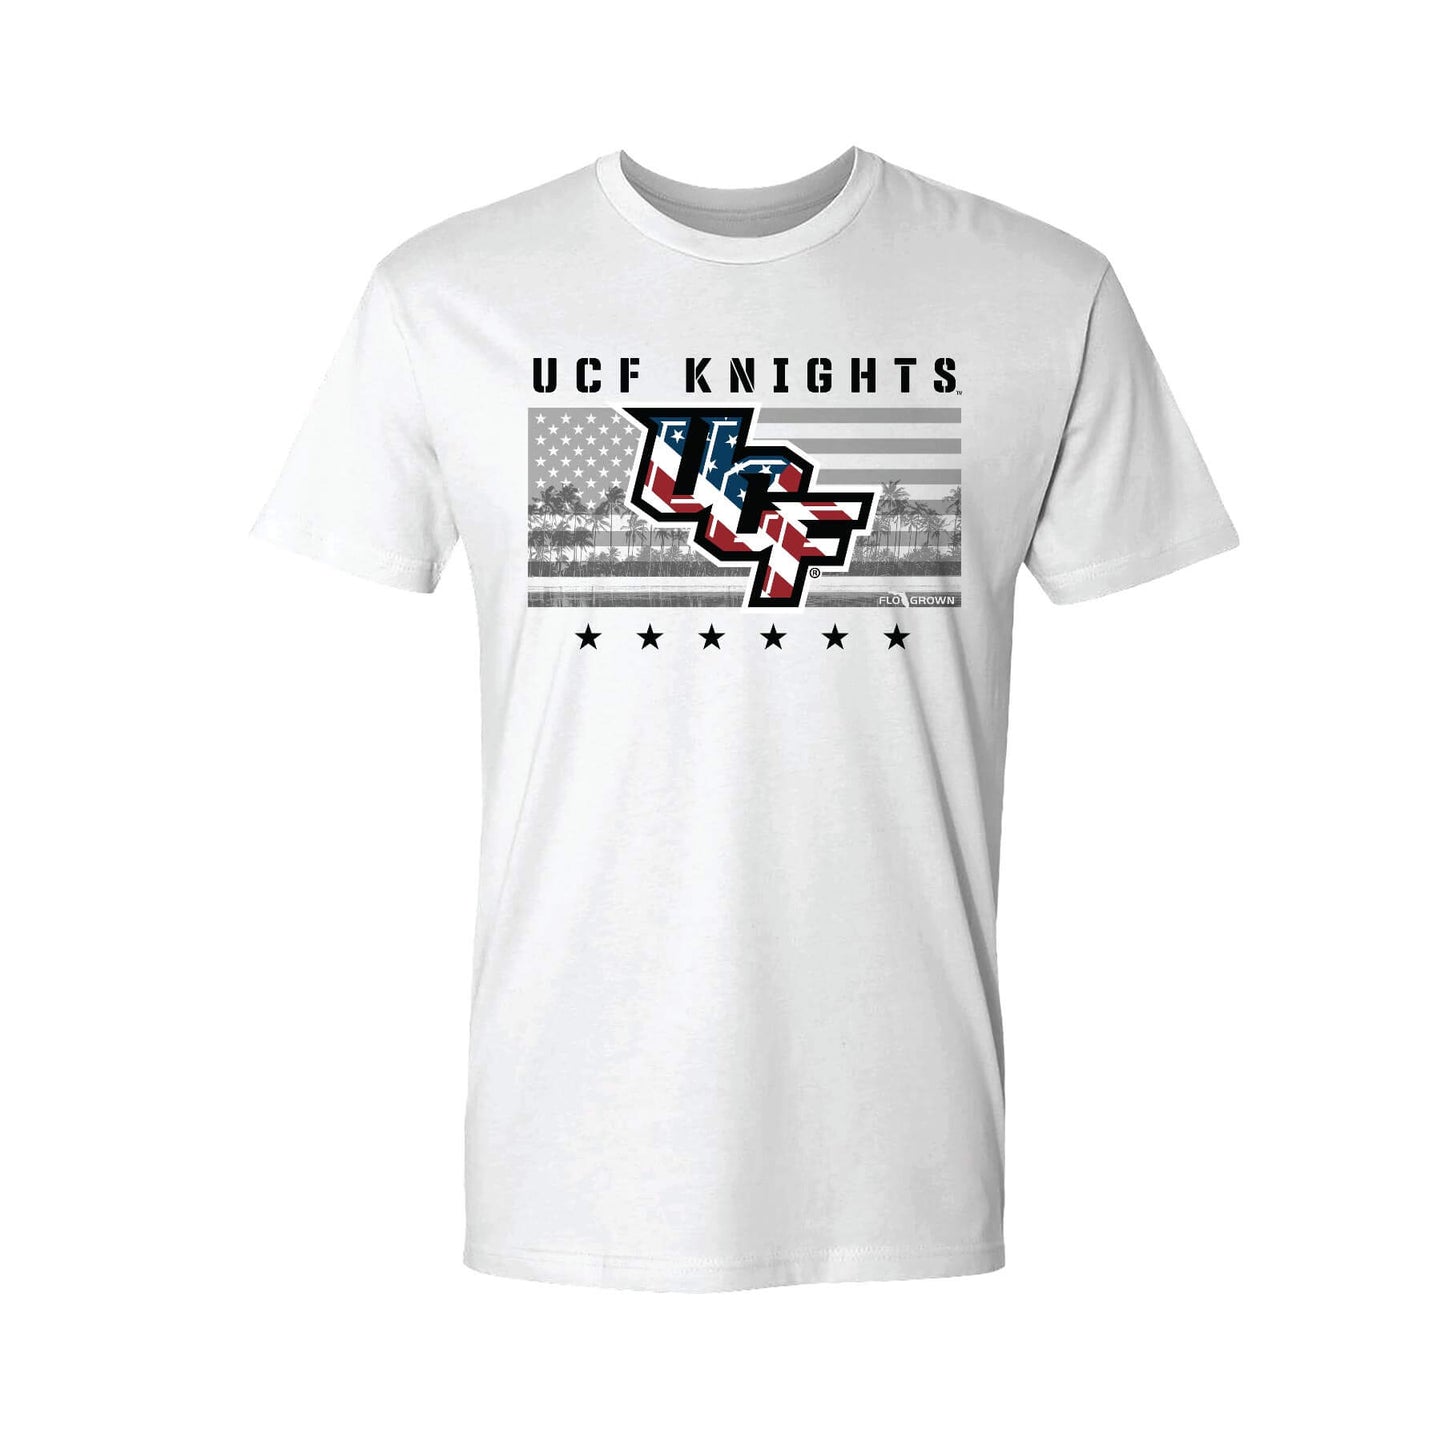 UCF Knights We Salute You Tee